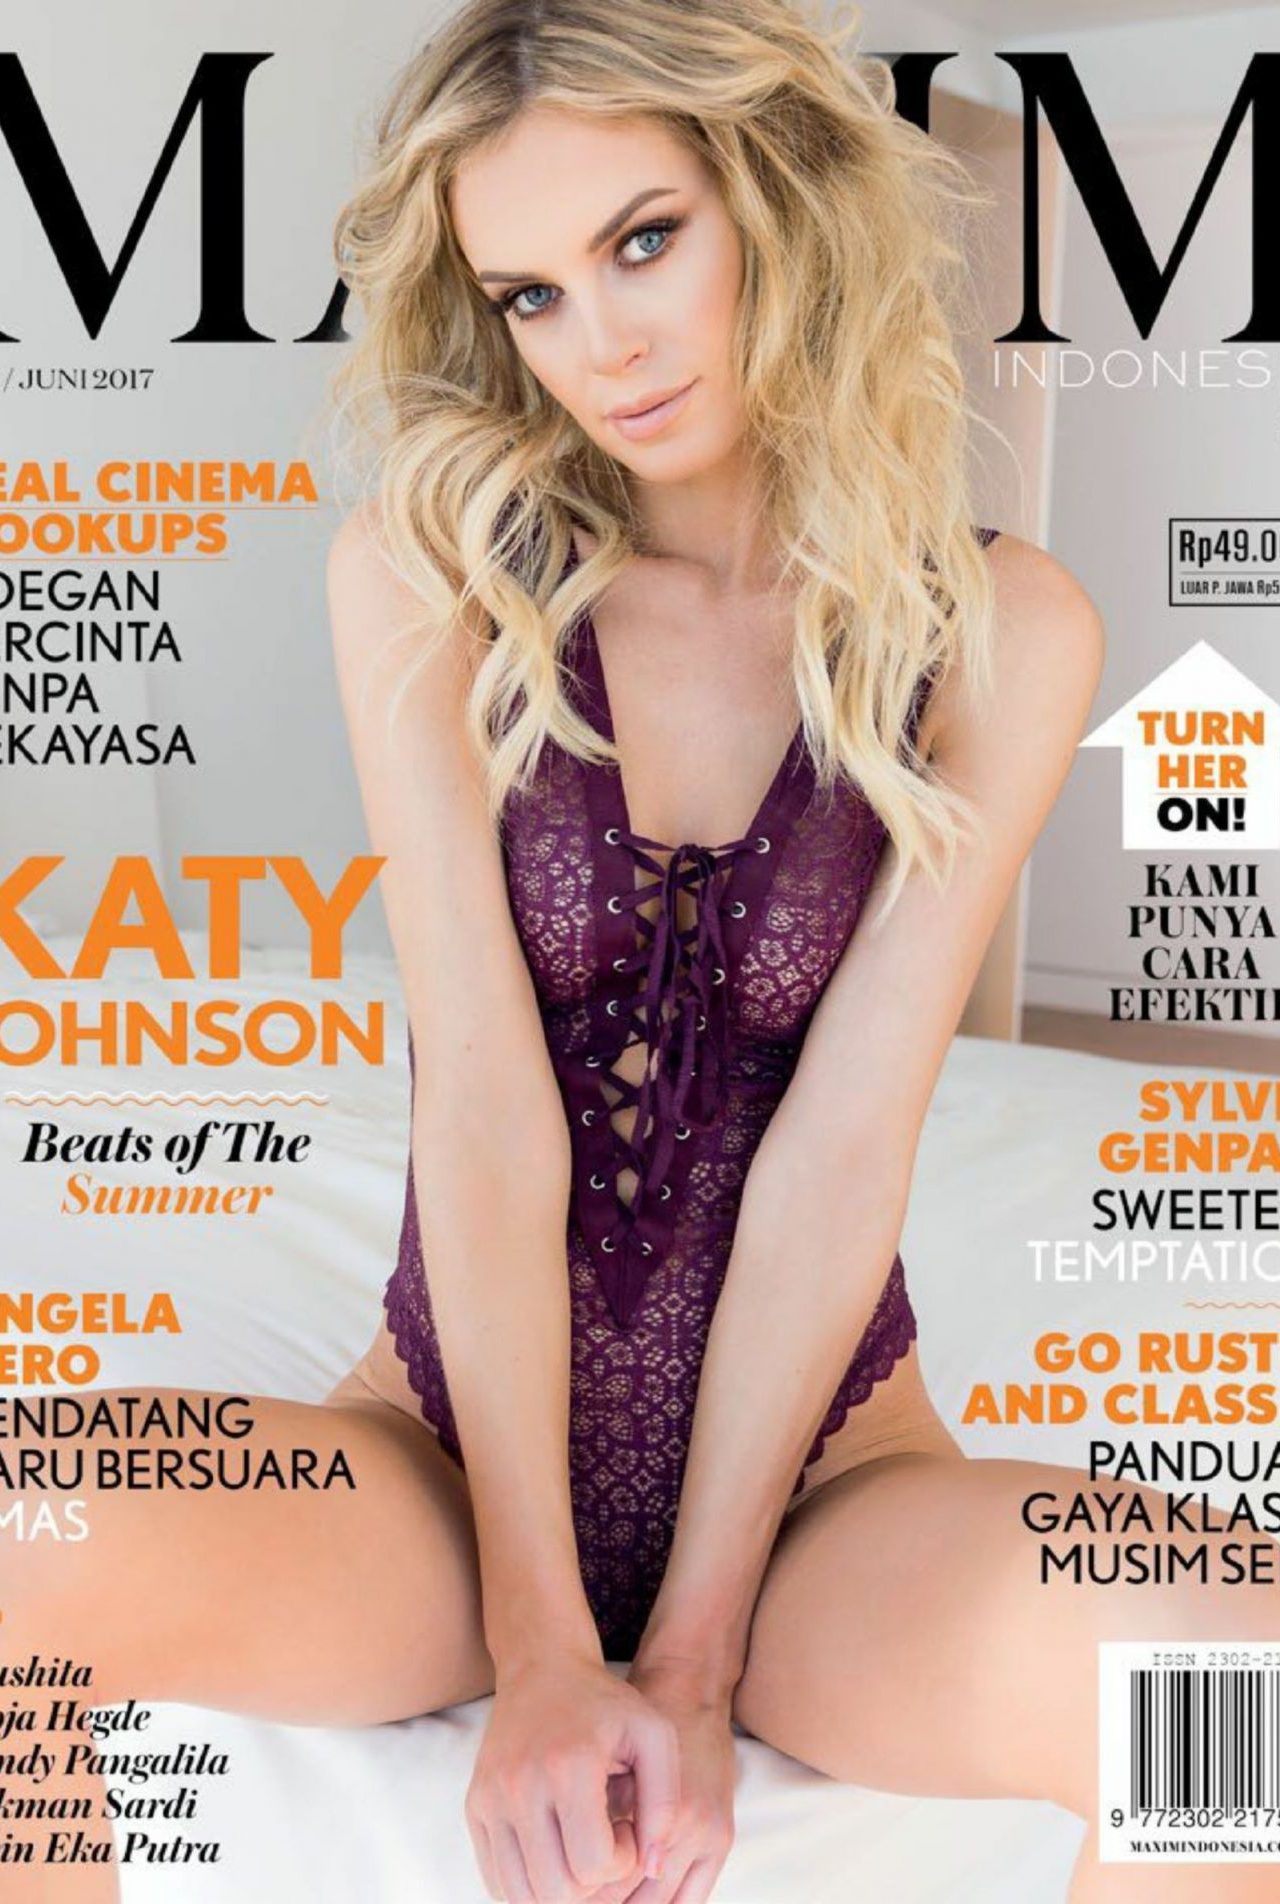 Katy Johnson for Maxim Magazine Indonesia